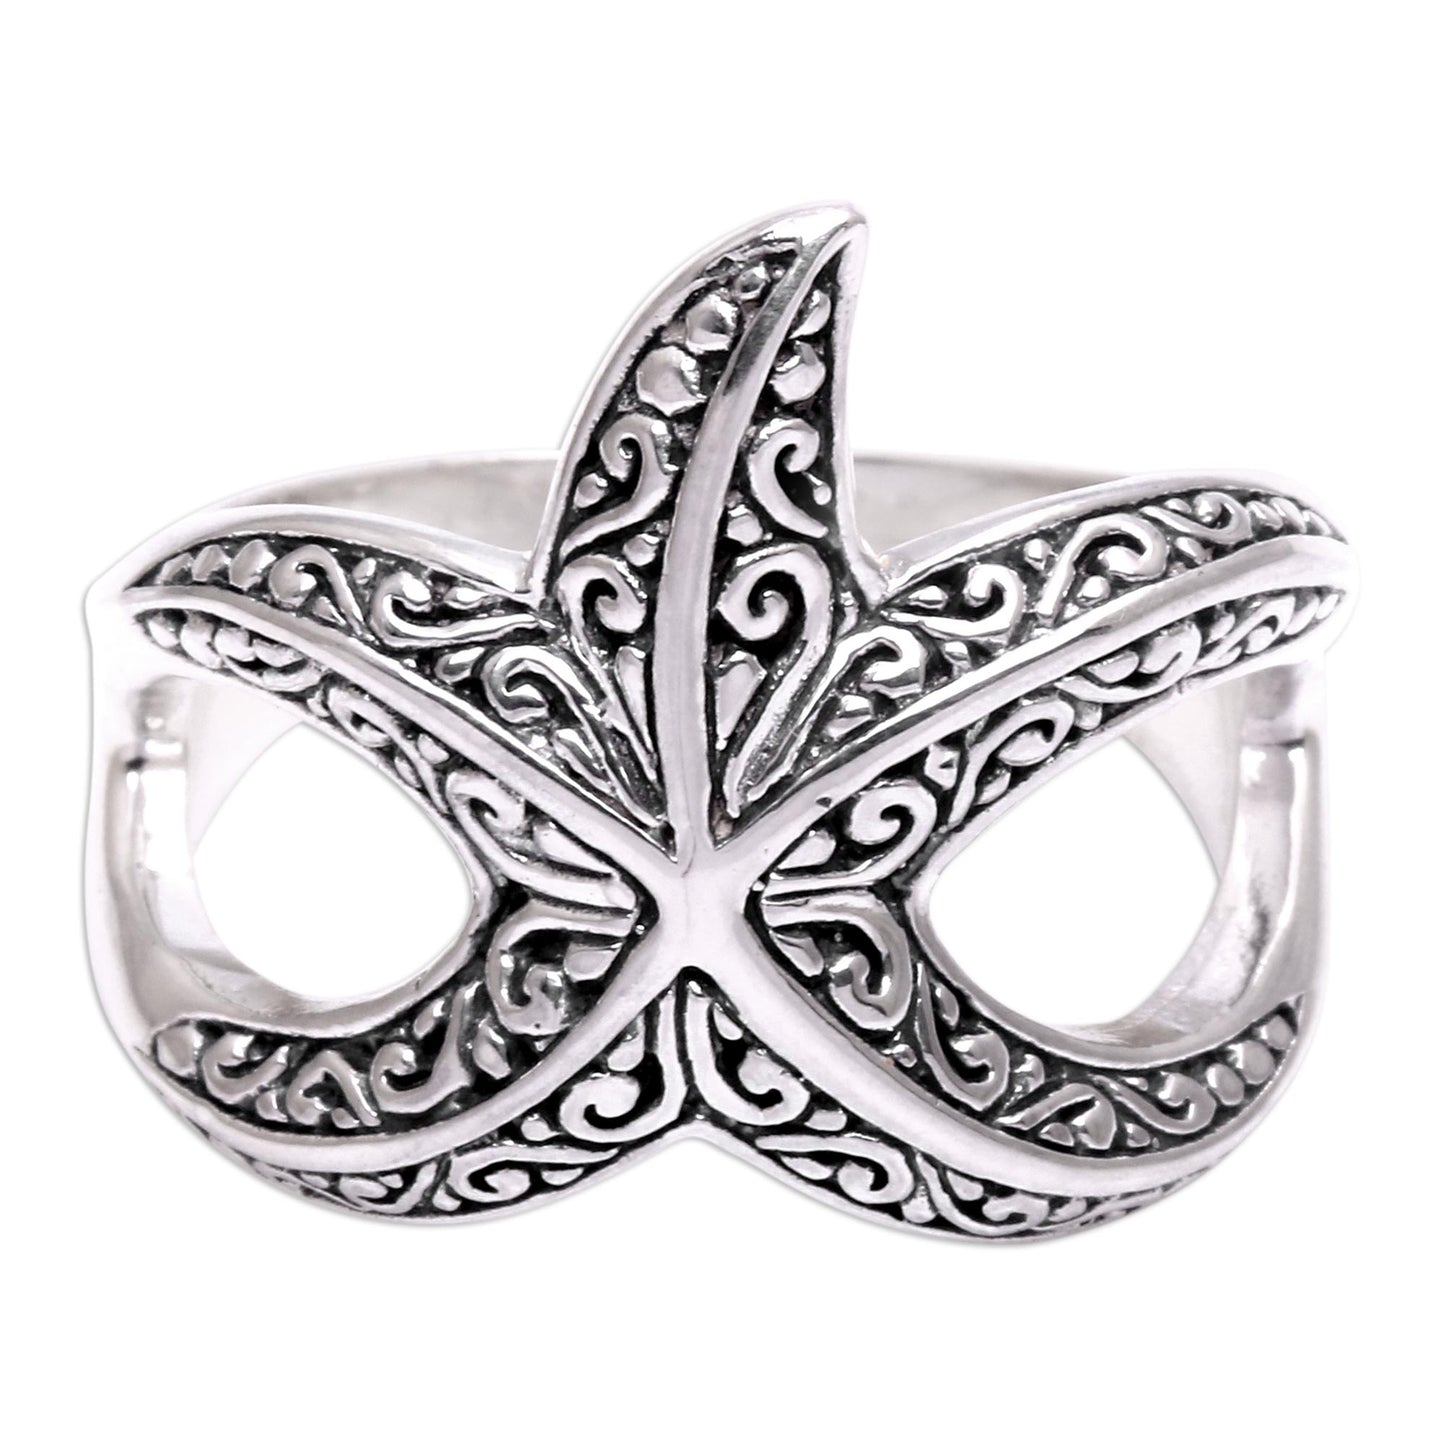 Bali Starfish Sterling Silver Ring